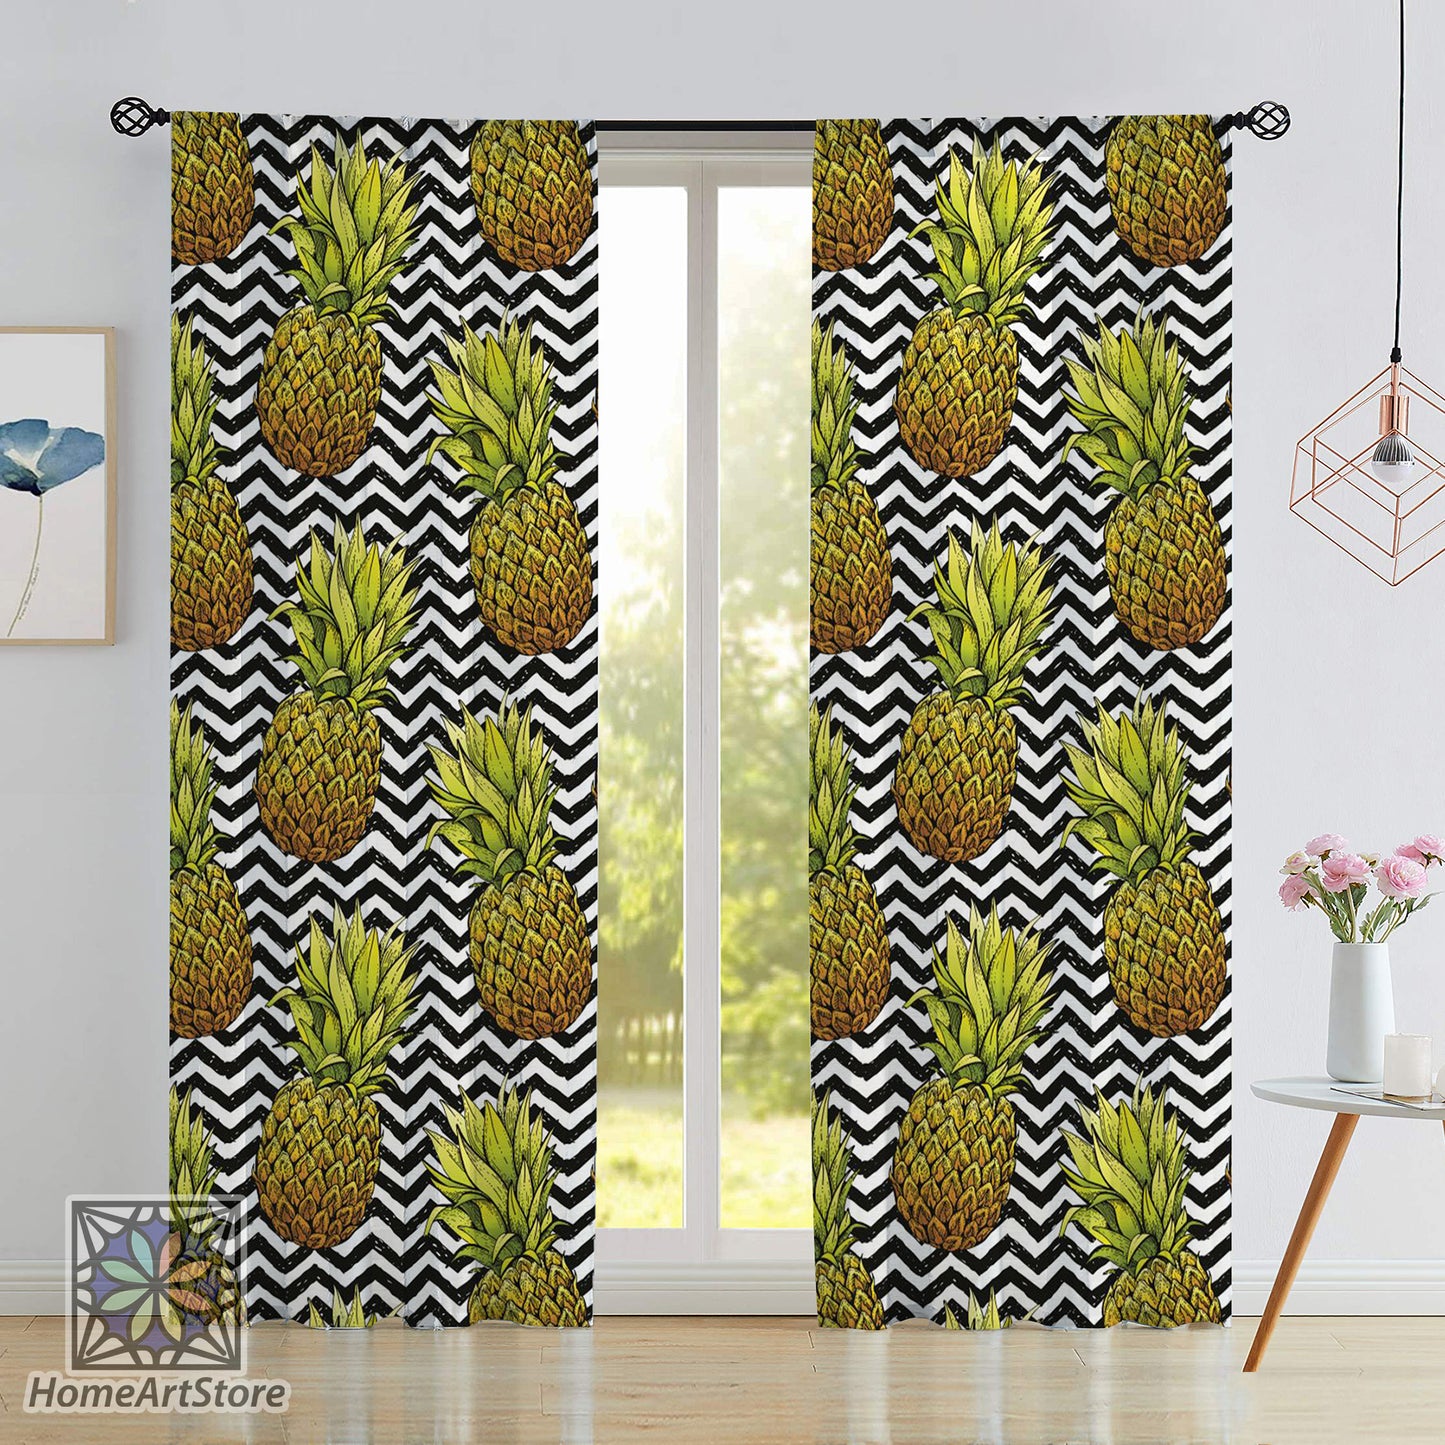 Pineapple Themed Curtain, Kitchen Curtain, Fruit Pattern Decor, Dining Room Curtain